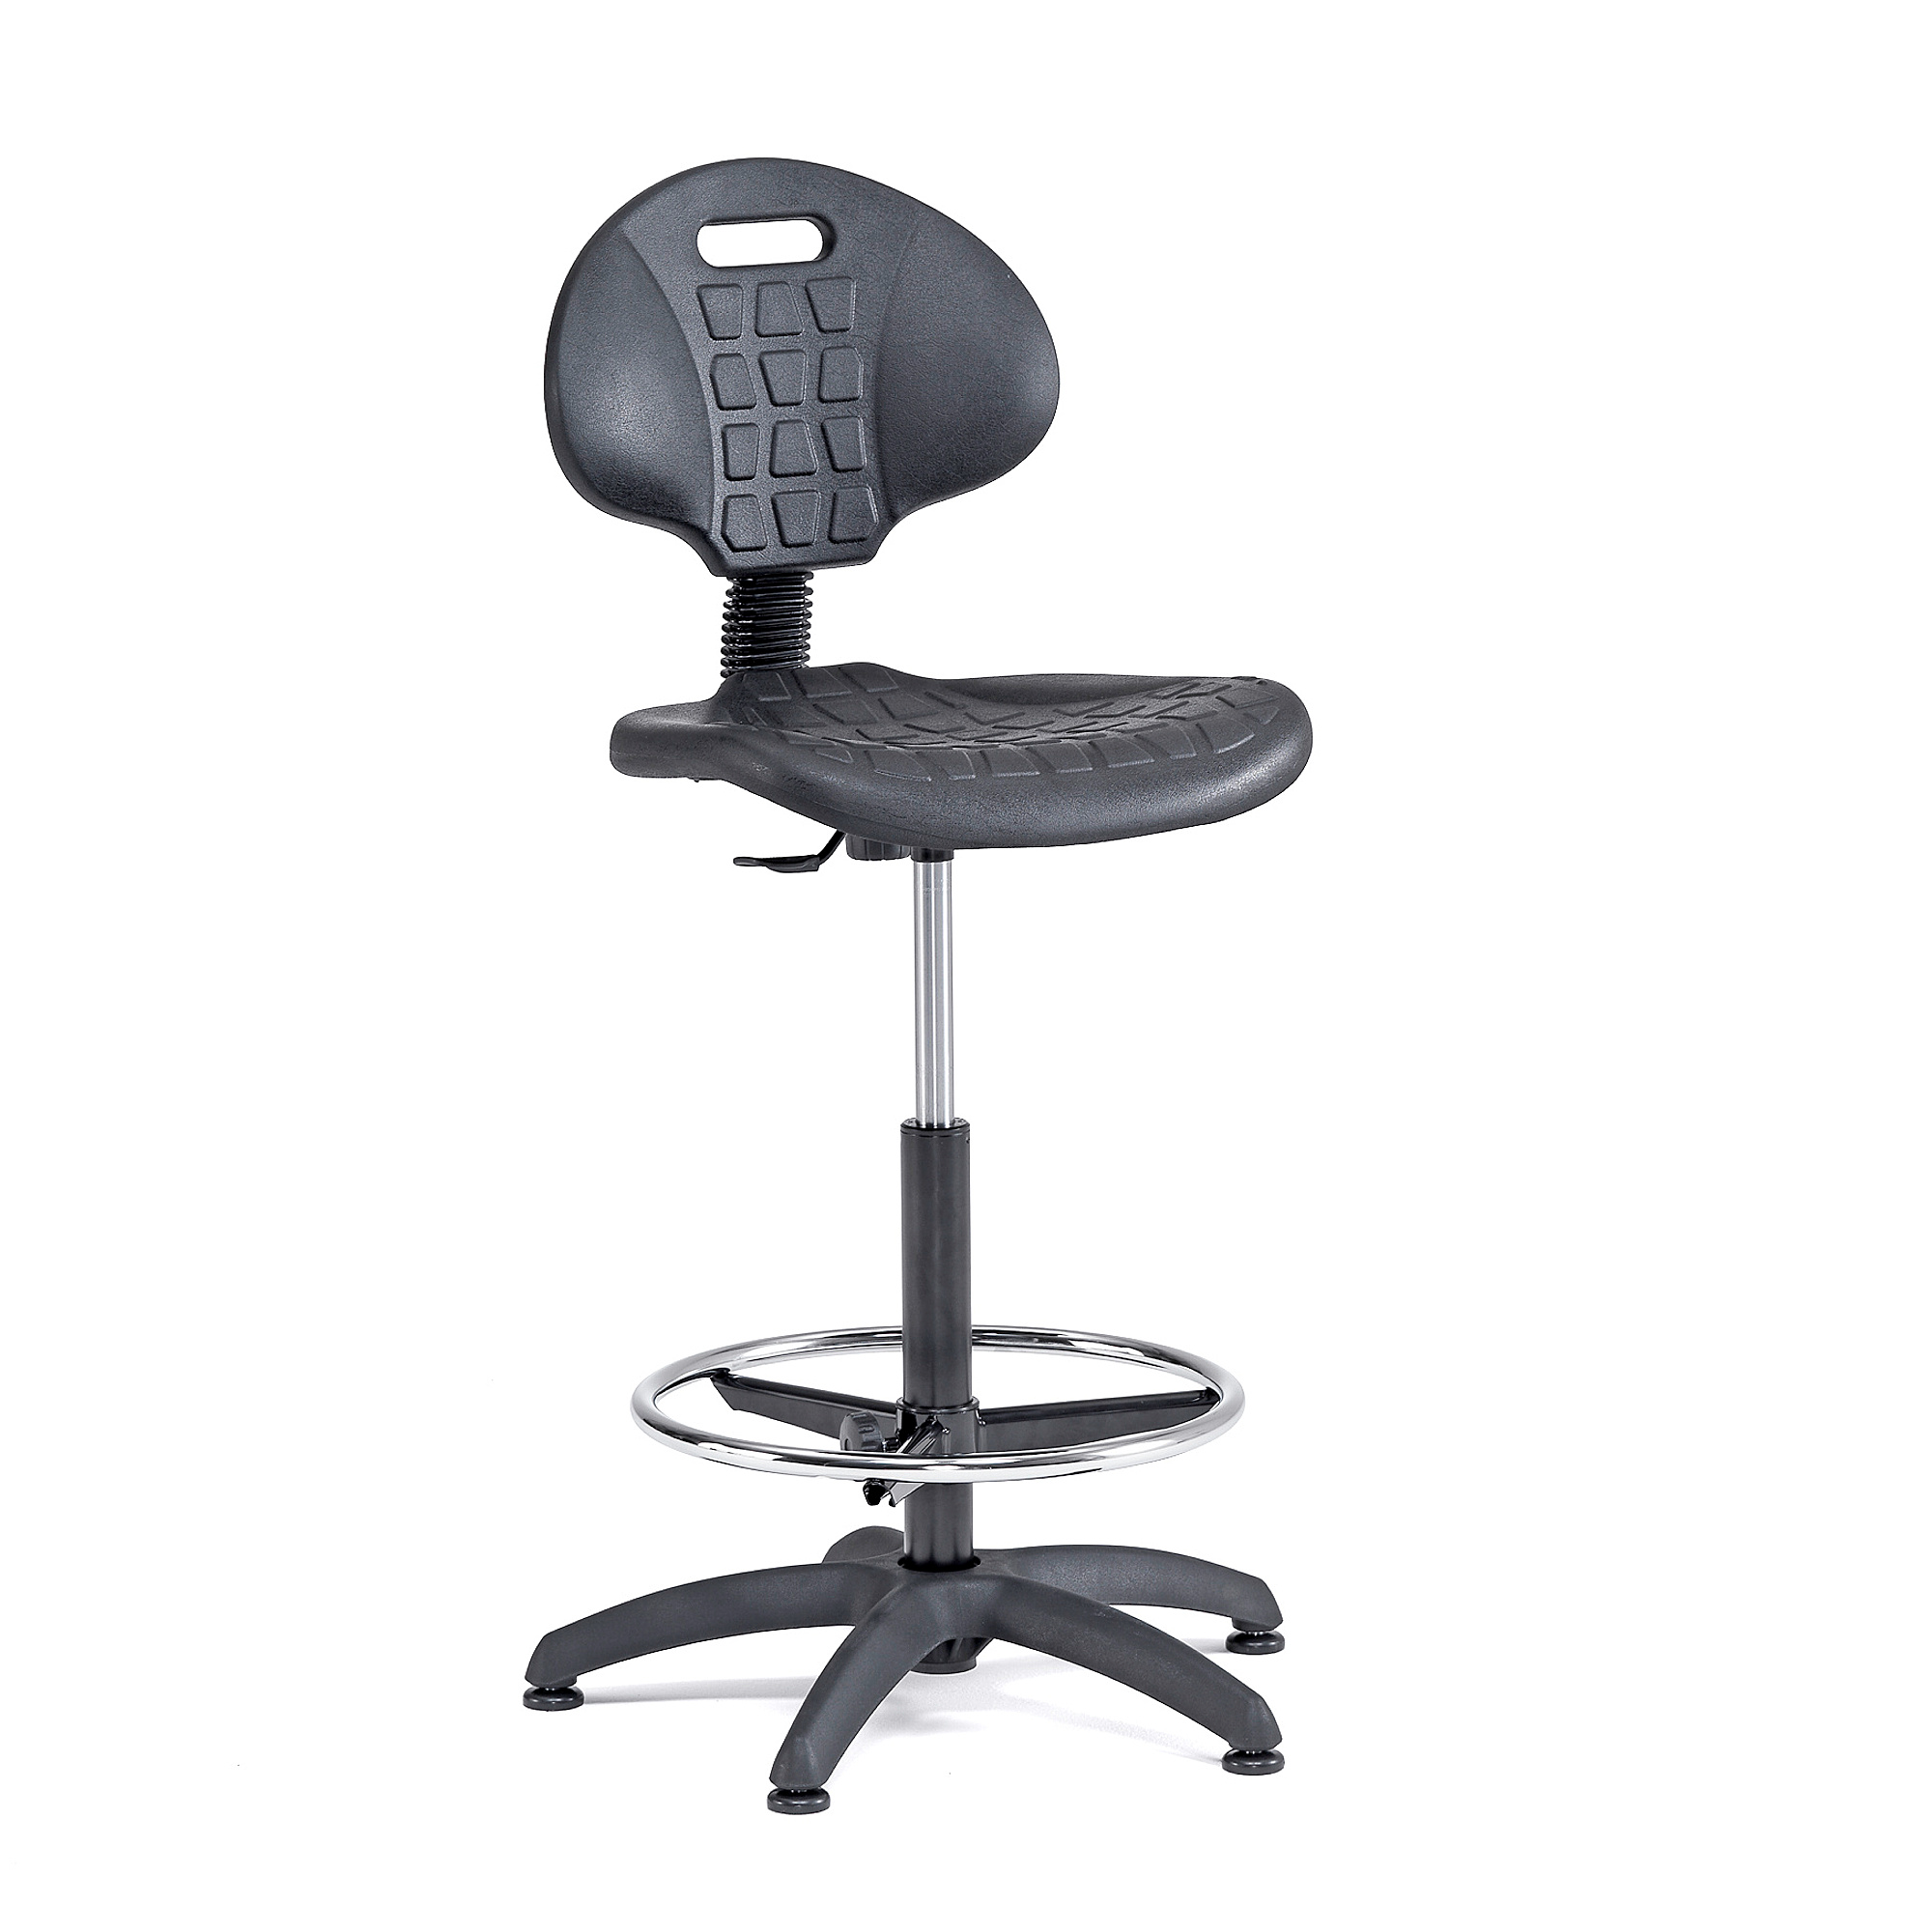 E-shop Pracovná dielenská stolička KILDA, s opierkou nôh, výška 540-740 mm